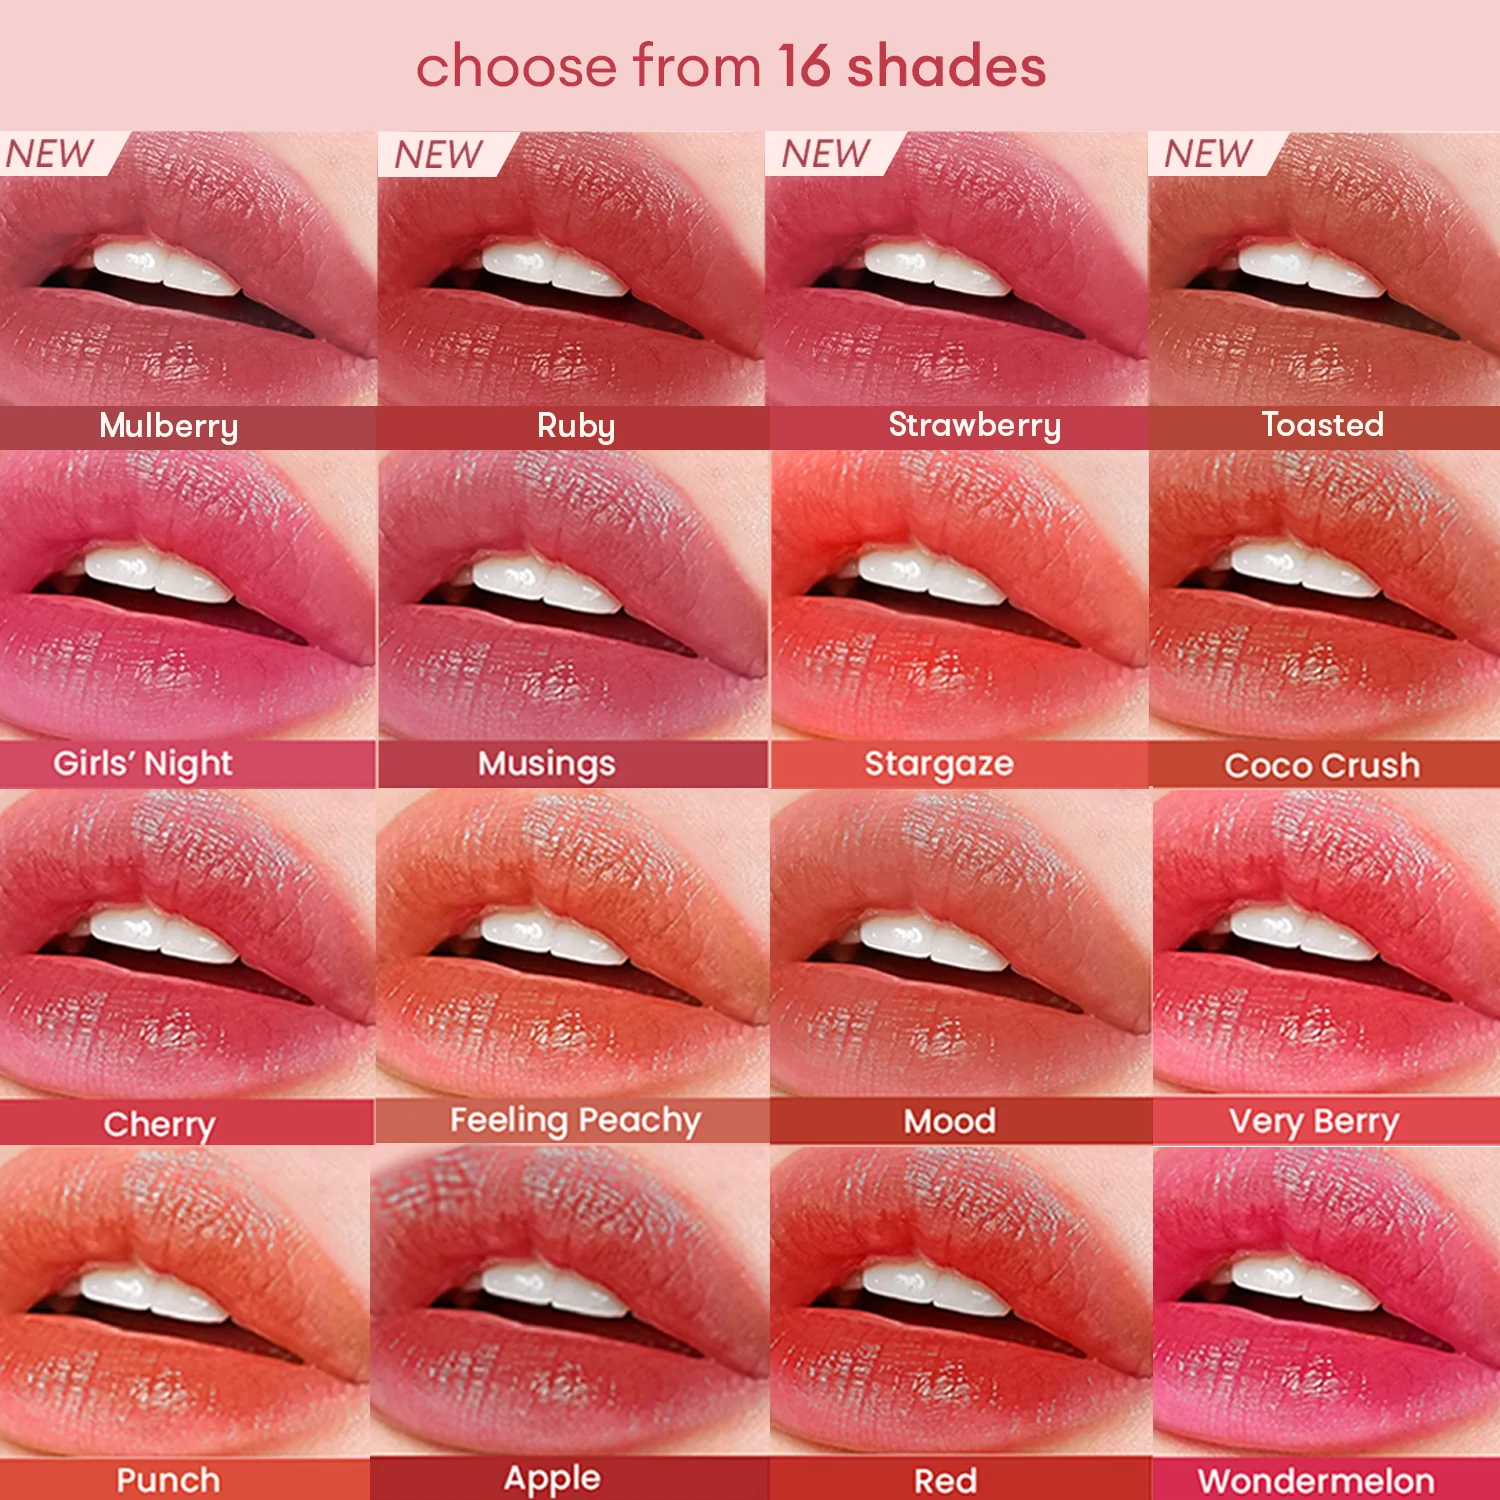 BLK Cosmetics Fresh Lip and Cheek Water Tint | Filipino Skincare NZ AU - new shades